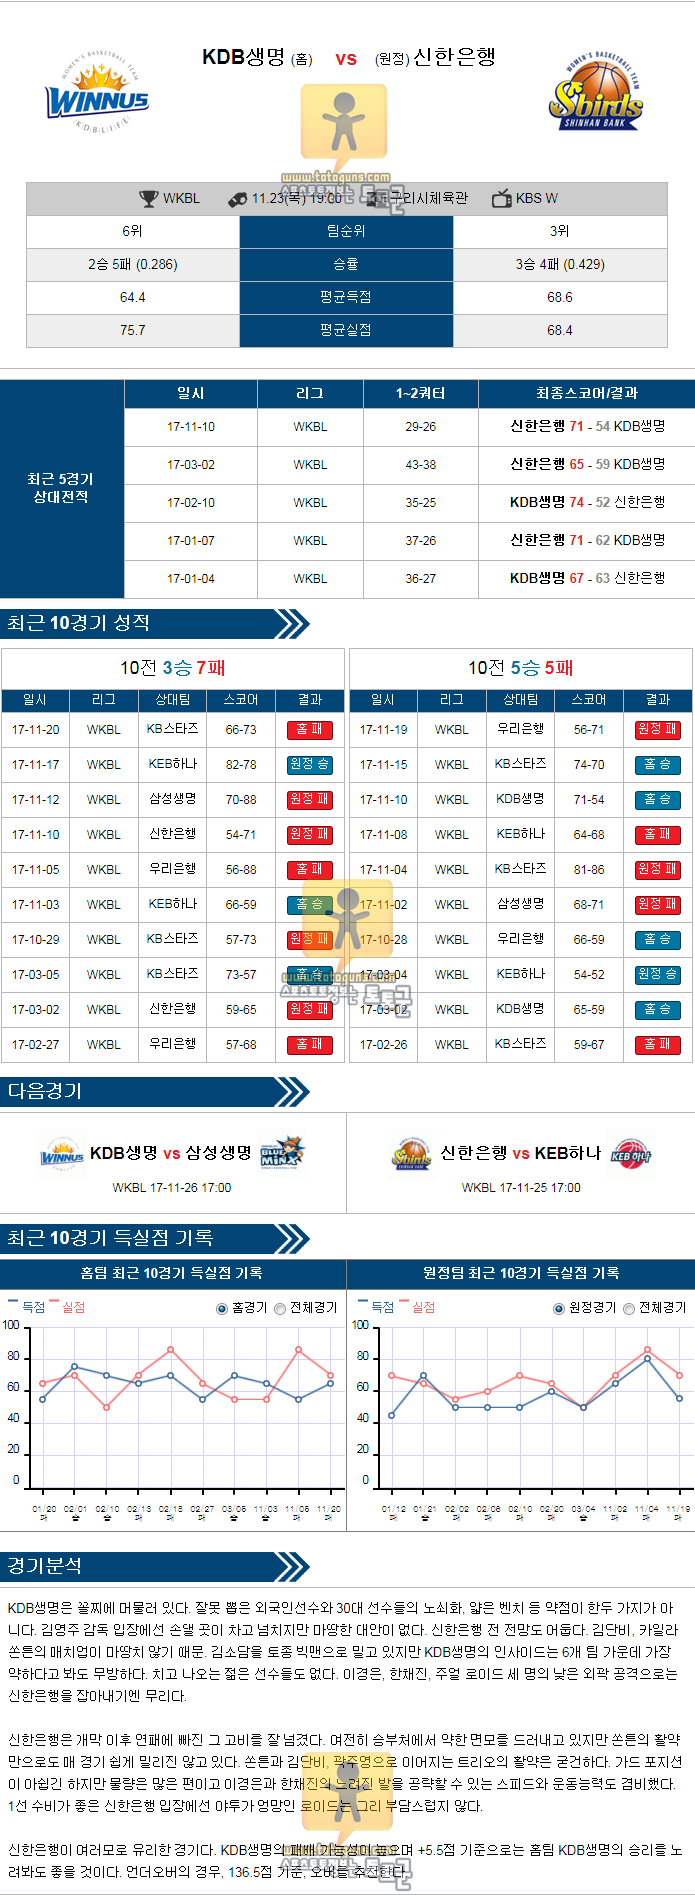 [WKBL] 11월 23일 19:00 여자농구분석 KDB생명 vs 신한은행